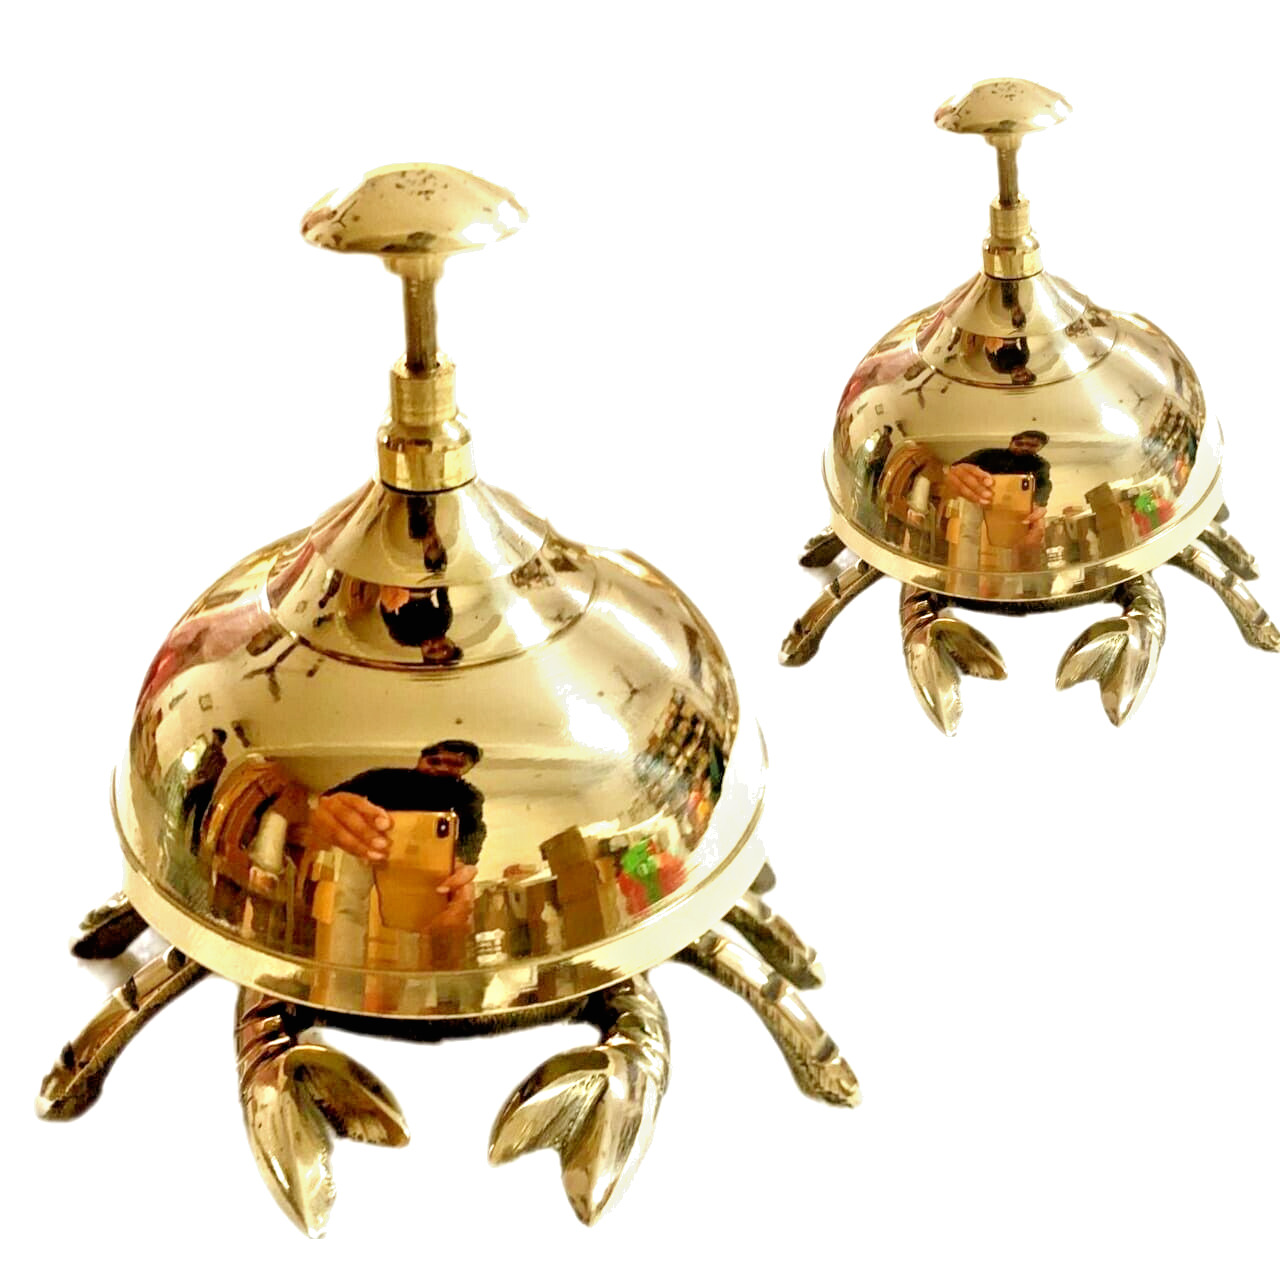 Vintage Brass Desk Bell (Pack of 2), Nautical Ornate Table Bell, Call Bell Gift